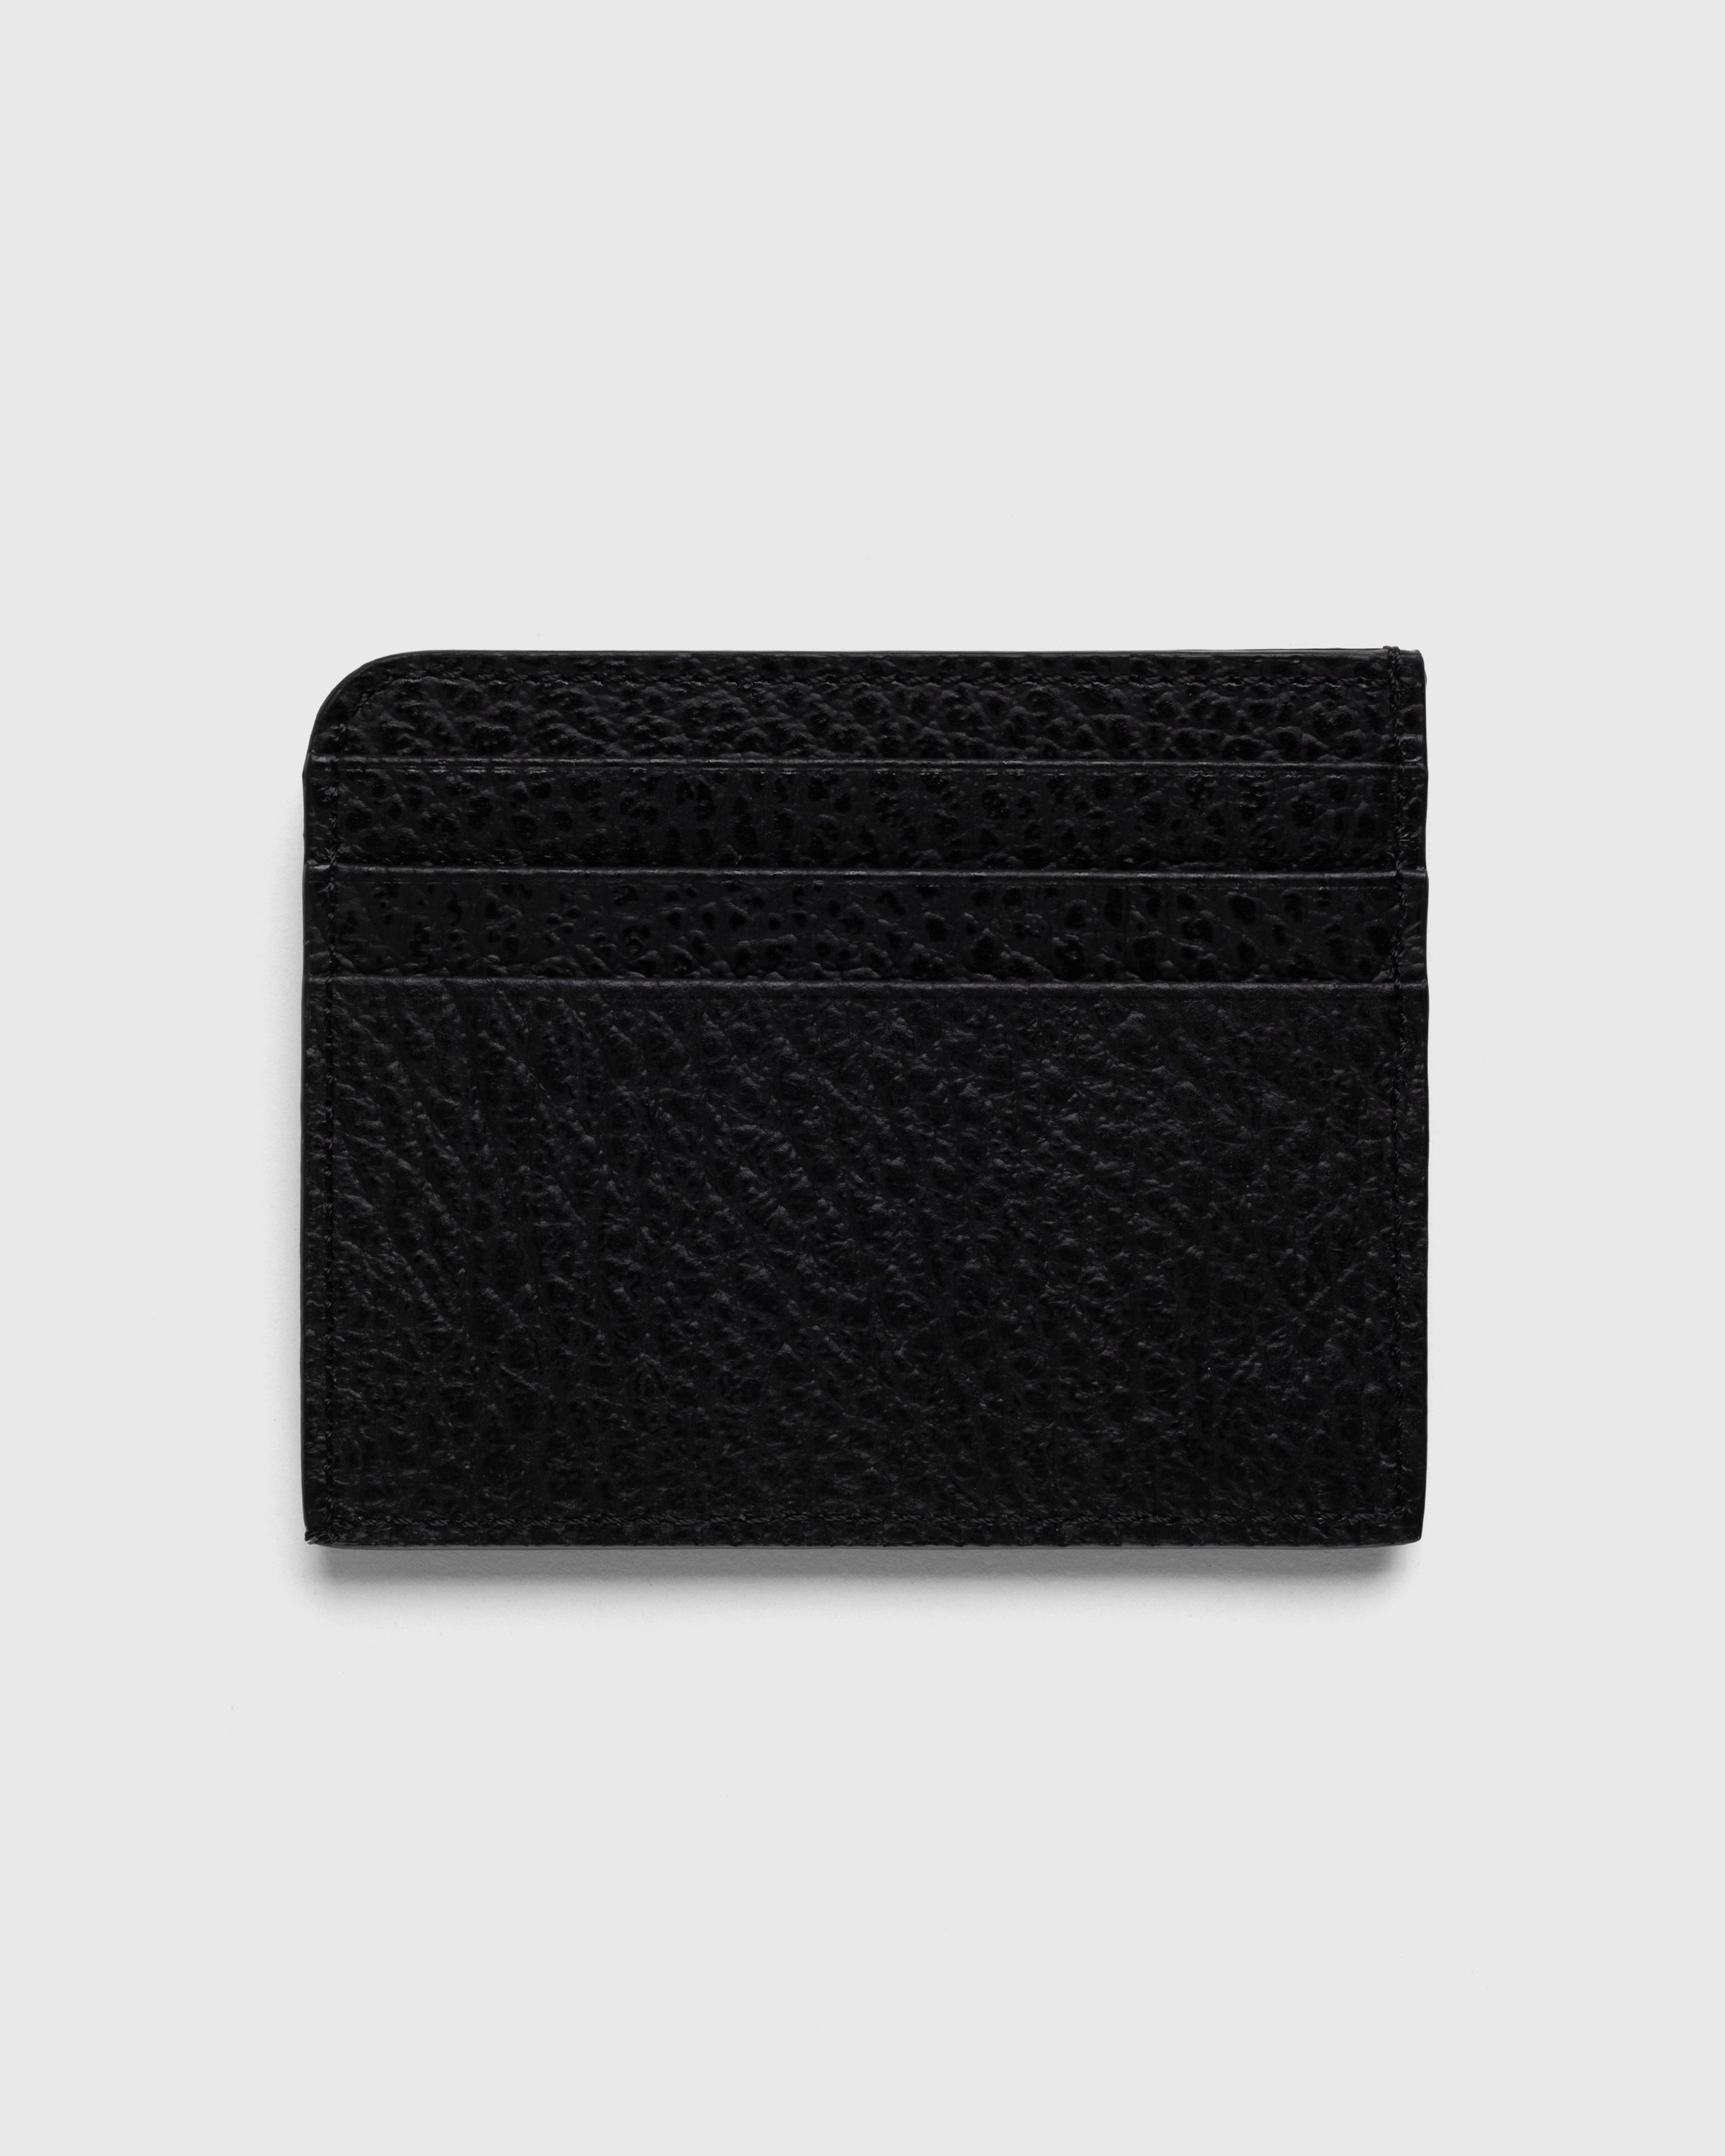 Maison Margiela - Leather Card Holder Black - Accessories - Black - Image 2